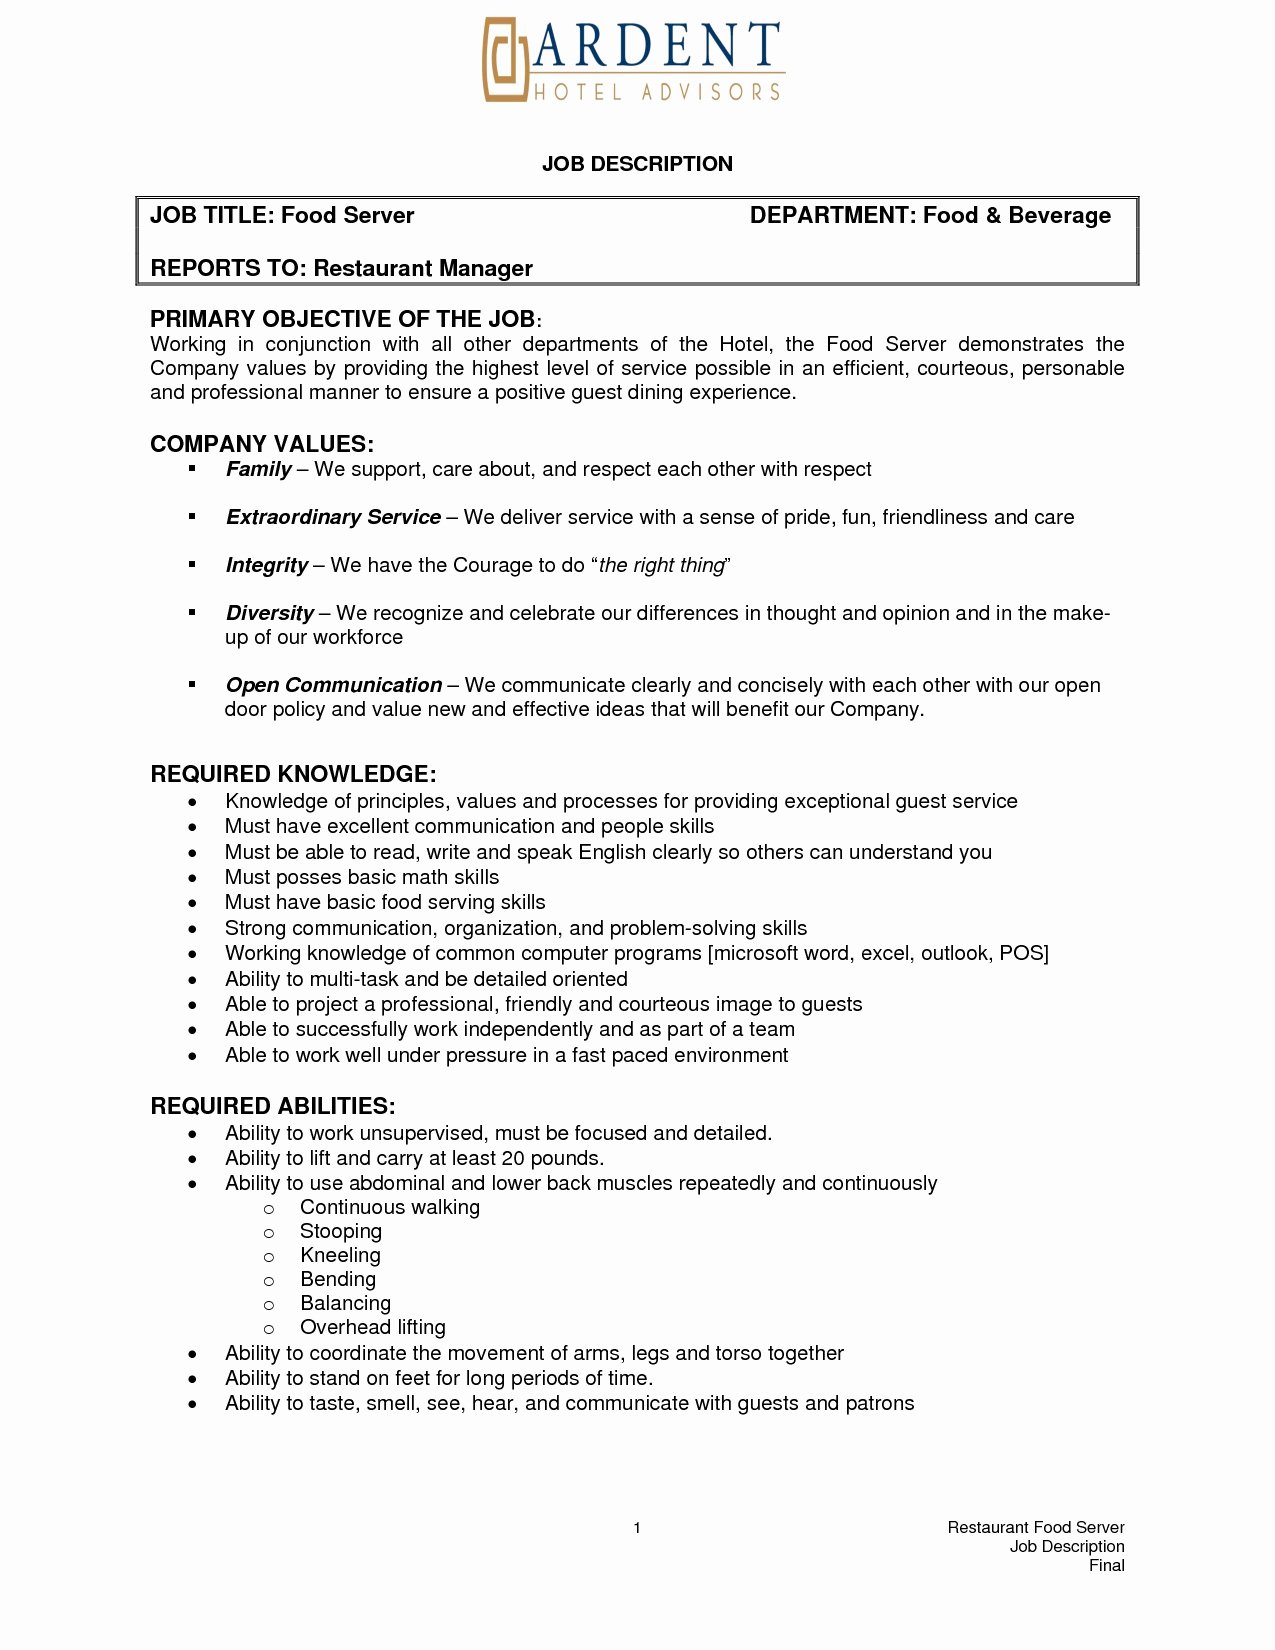 Resume for Food Server Job Duties List Example